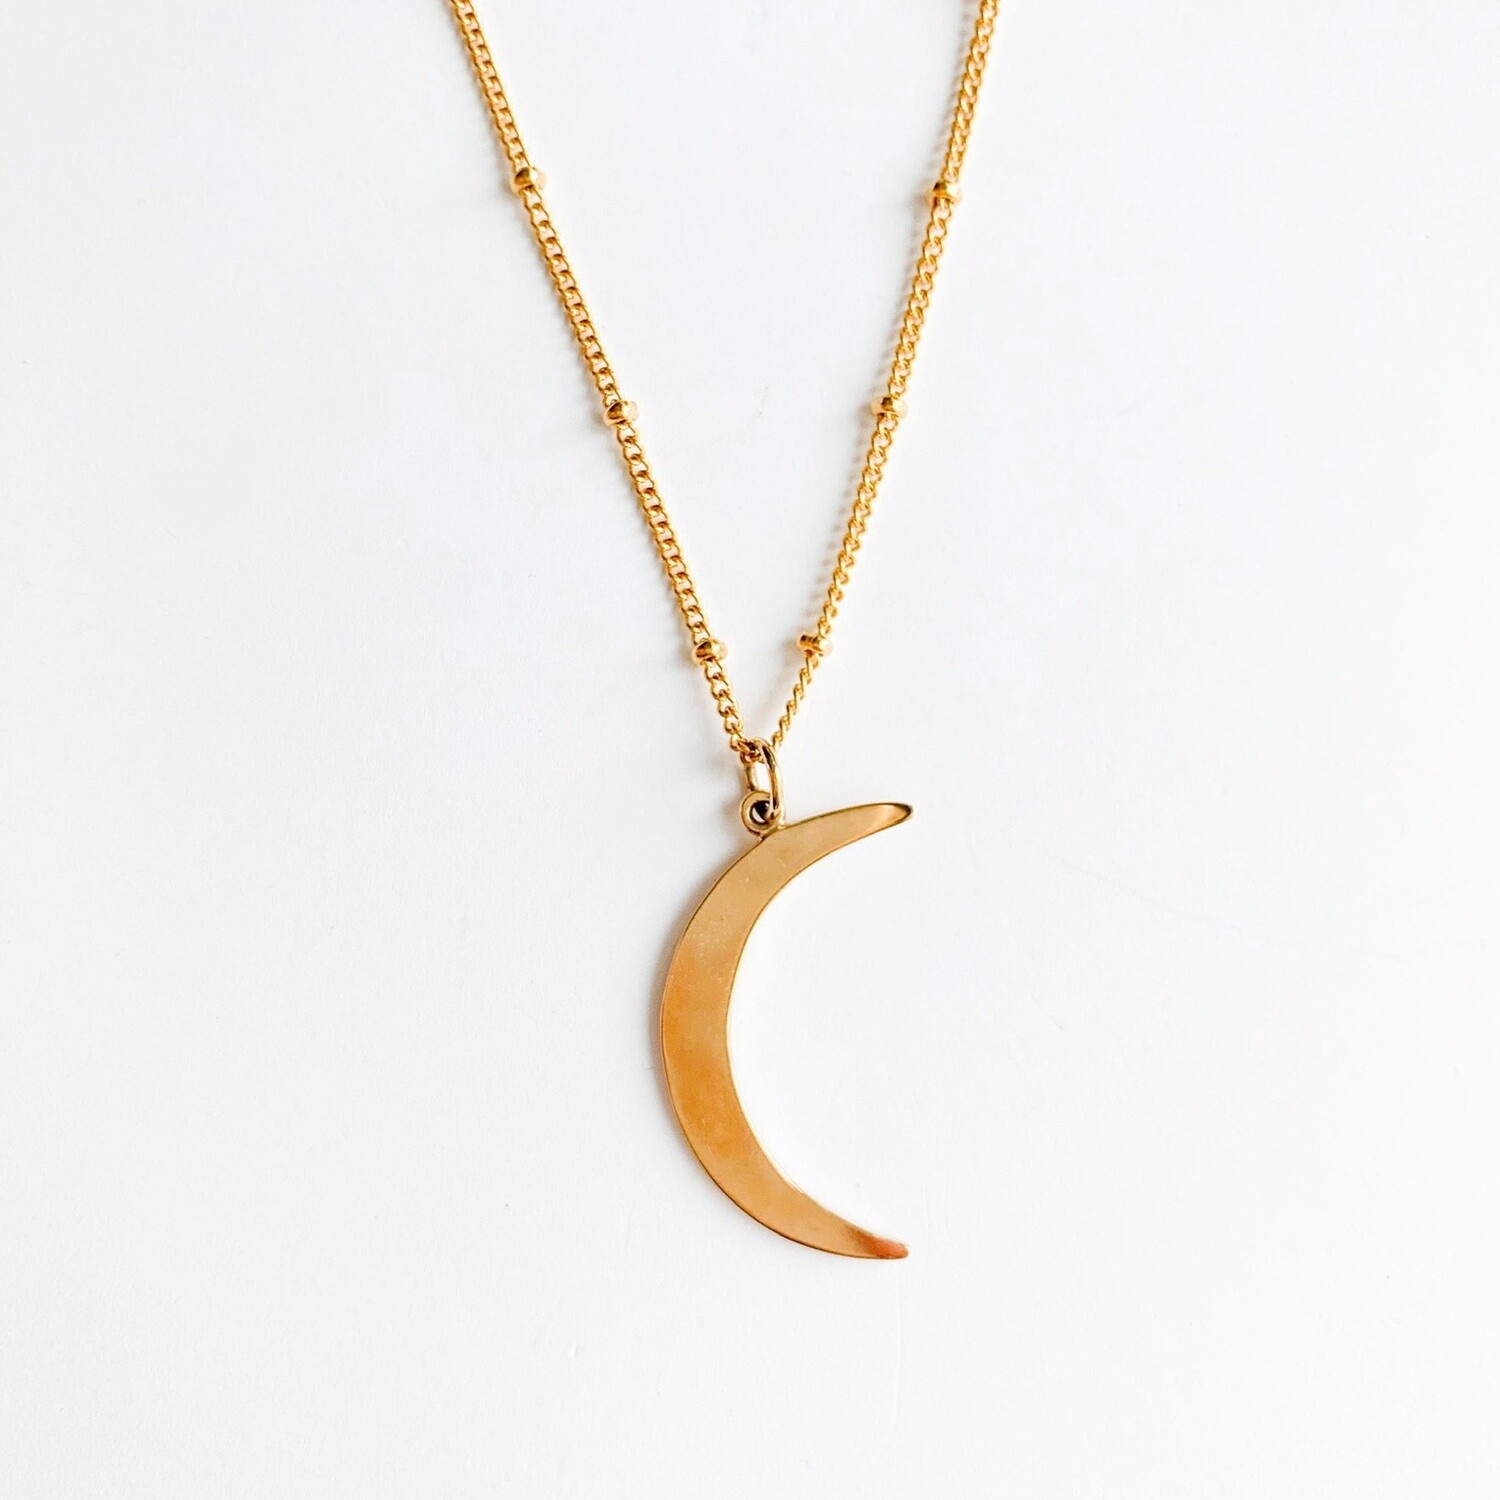 Bronze crescent moon necklace - large